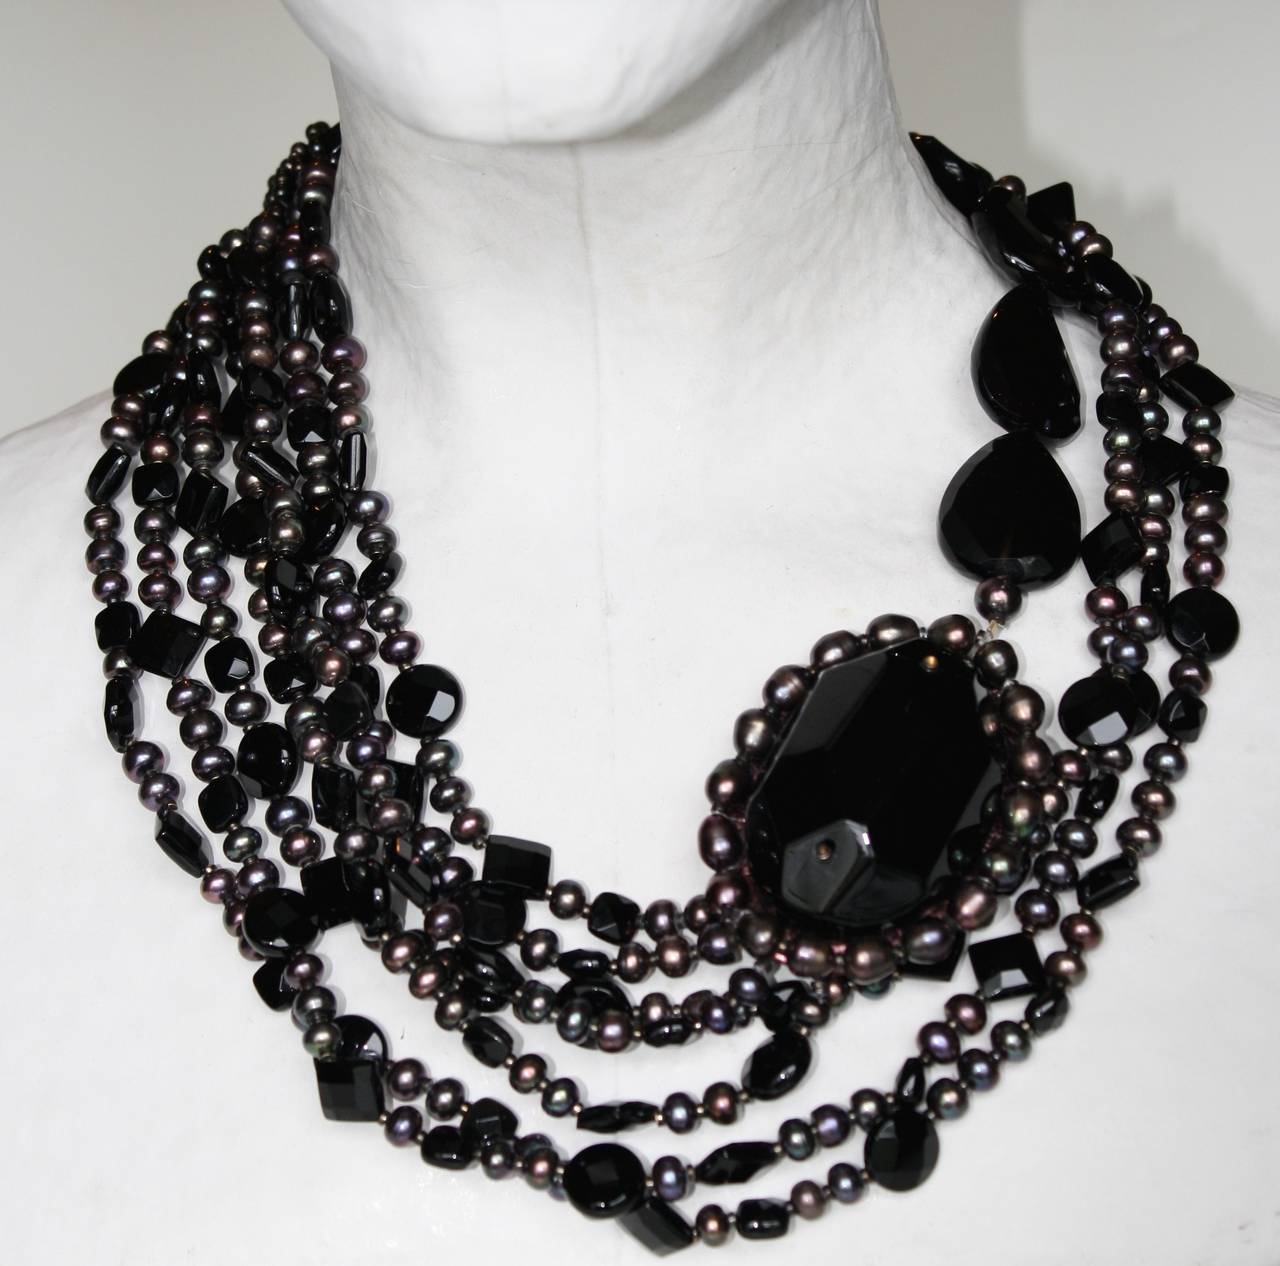 Multi strand biwa pearl necklace with black onyx beads from Italian designer Daniele Cornaggia.